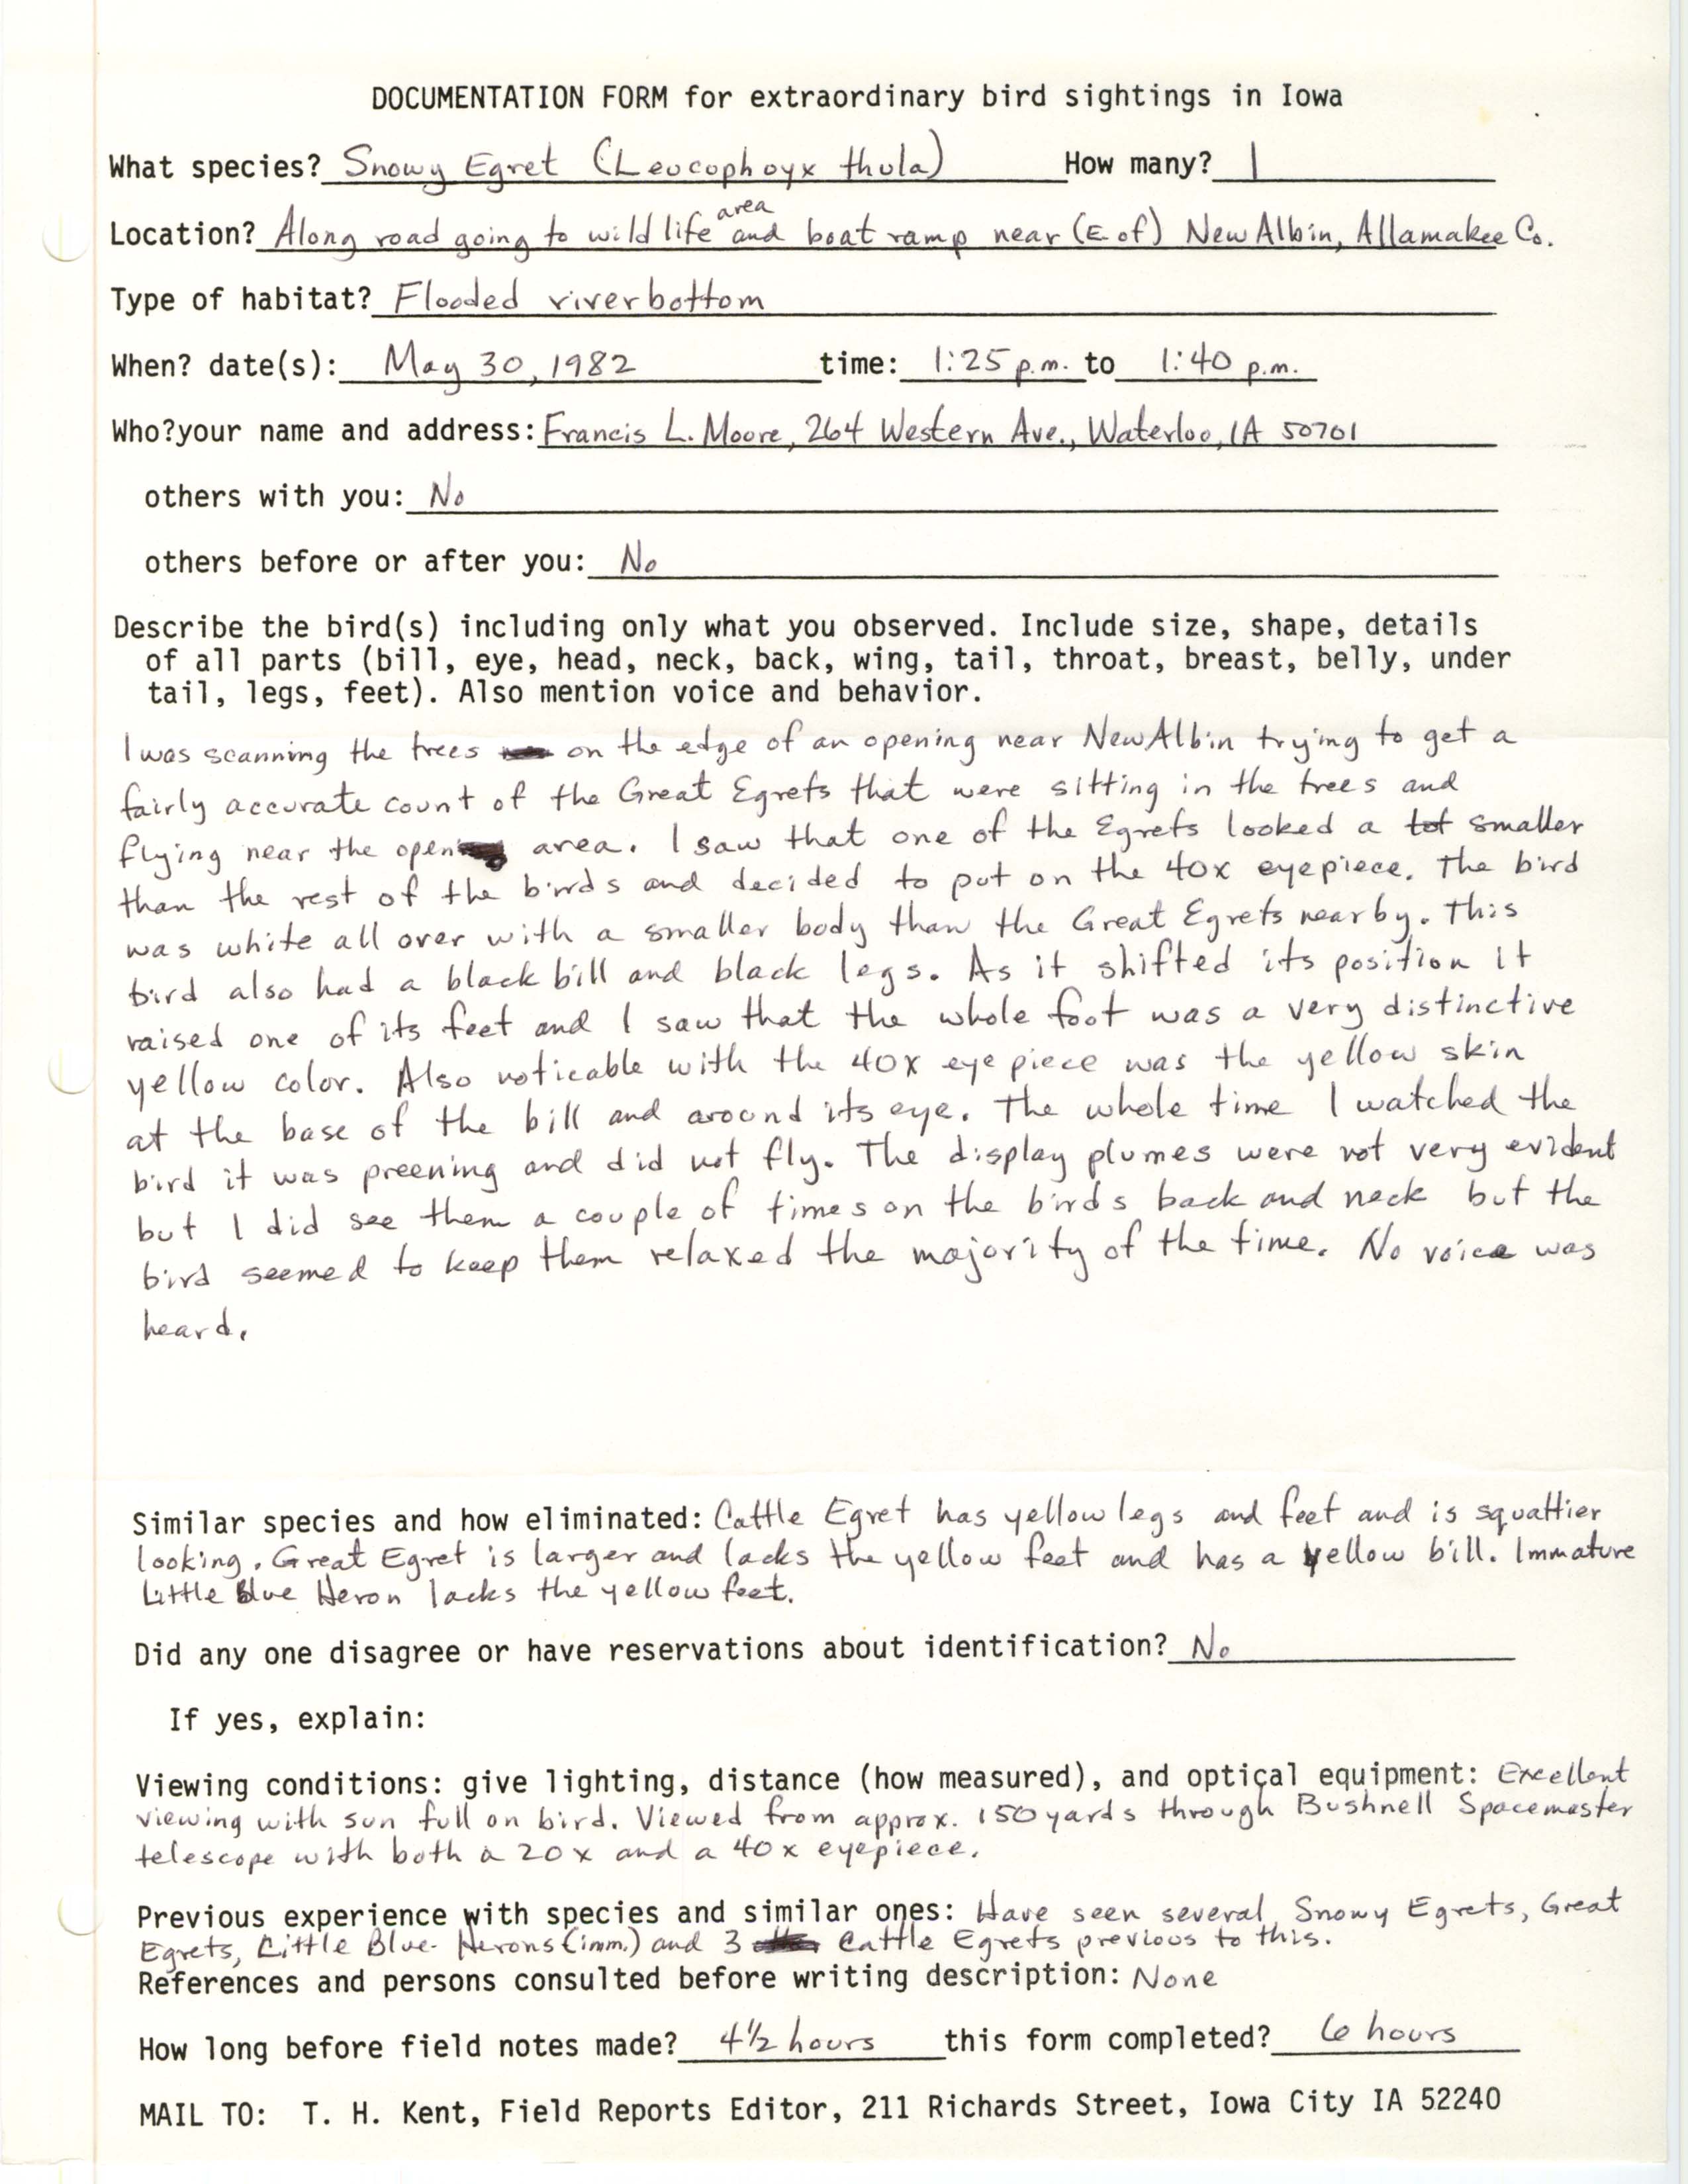 Rare bird documentation form for Snowy Egret at New Albin, 1982